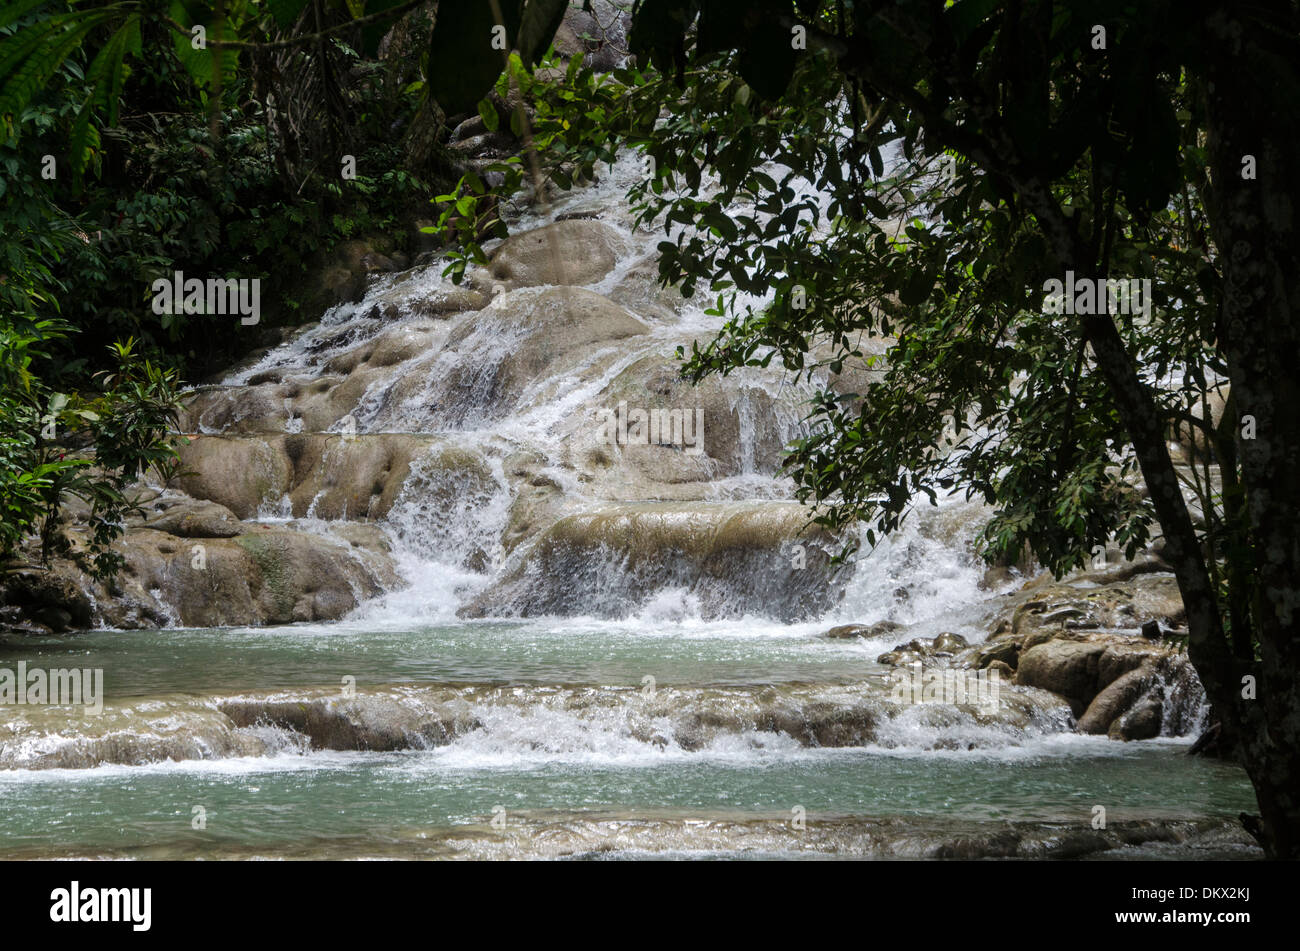 dunn's river falls, waterfall, nature, Ocho Rios, Jamaica, Stock Photo